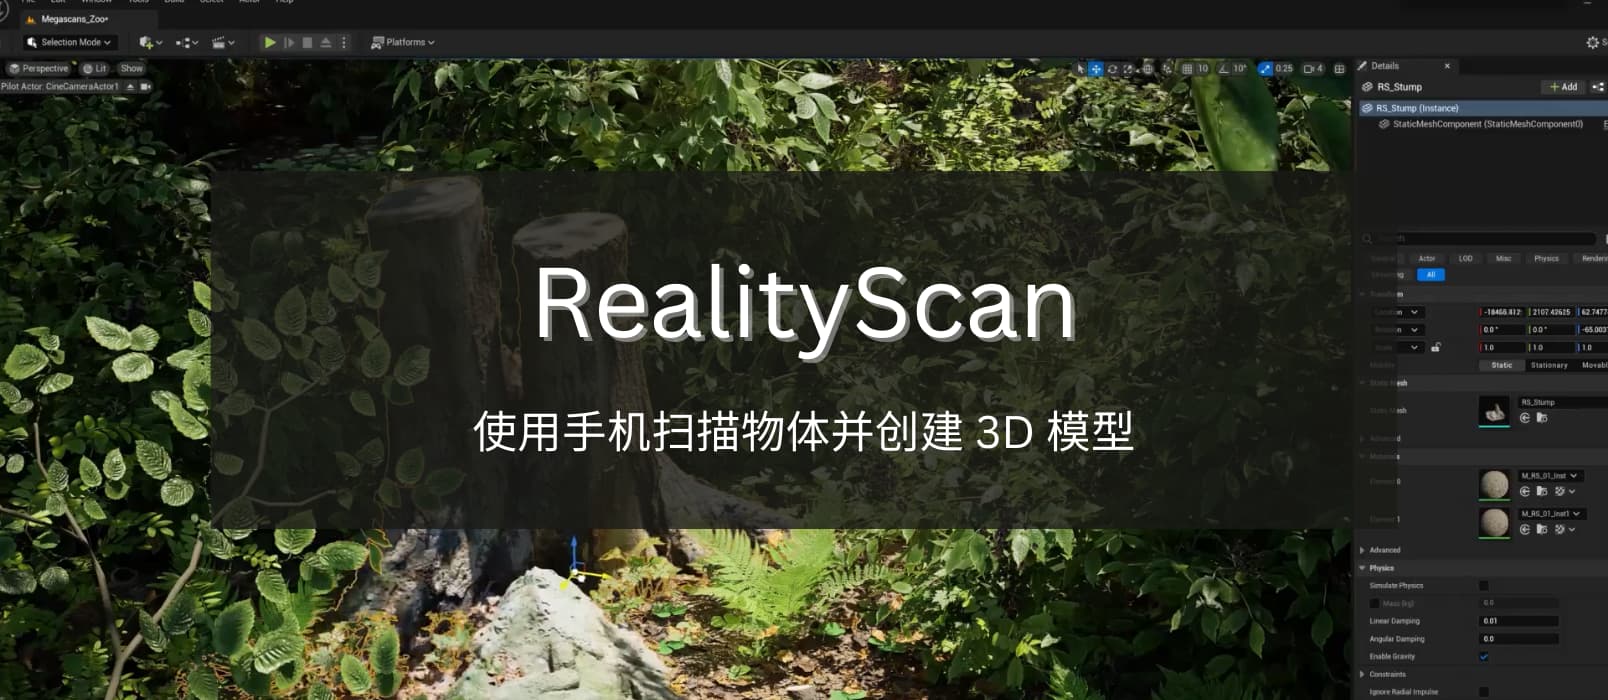 RealityScan - 来自 Epic，使用手机扫描物体并创建 3D 模型[iPhone/iPad]